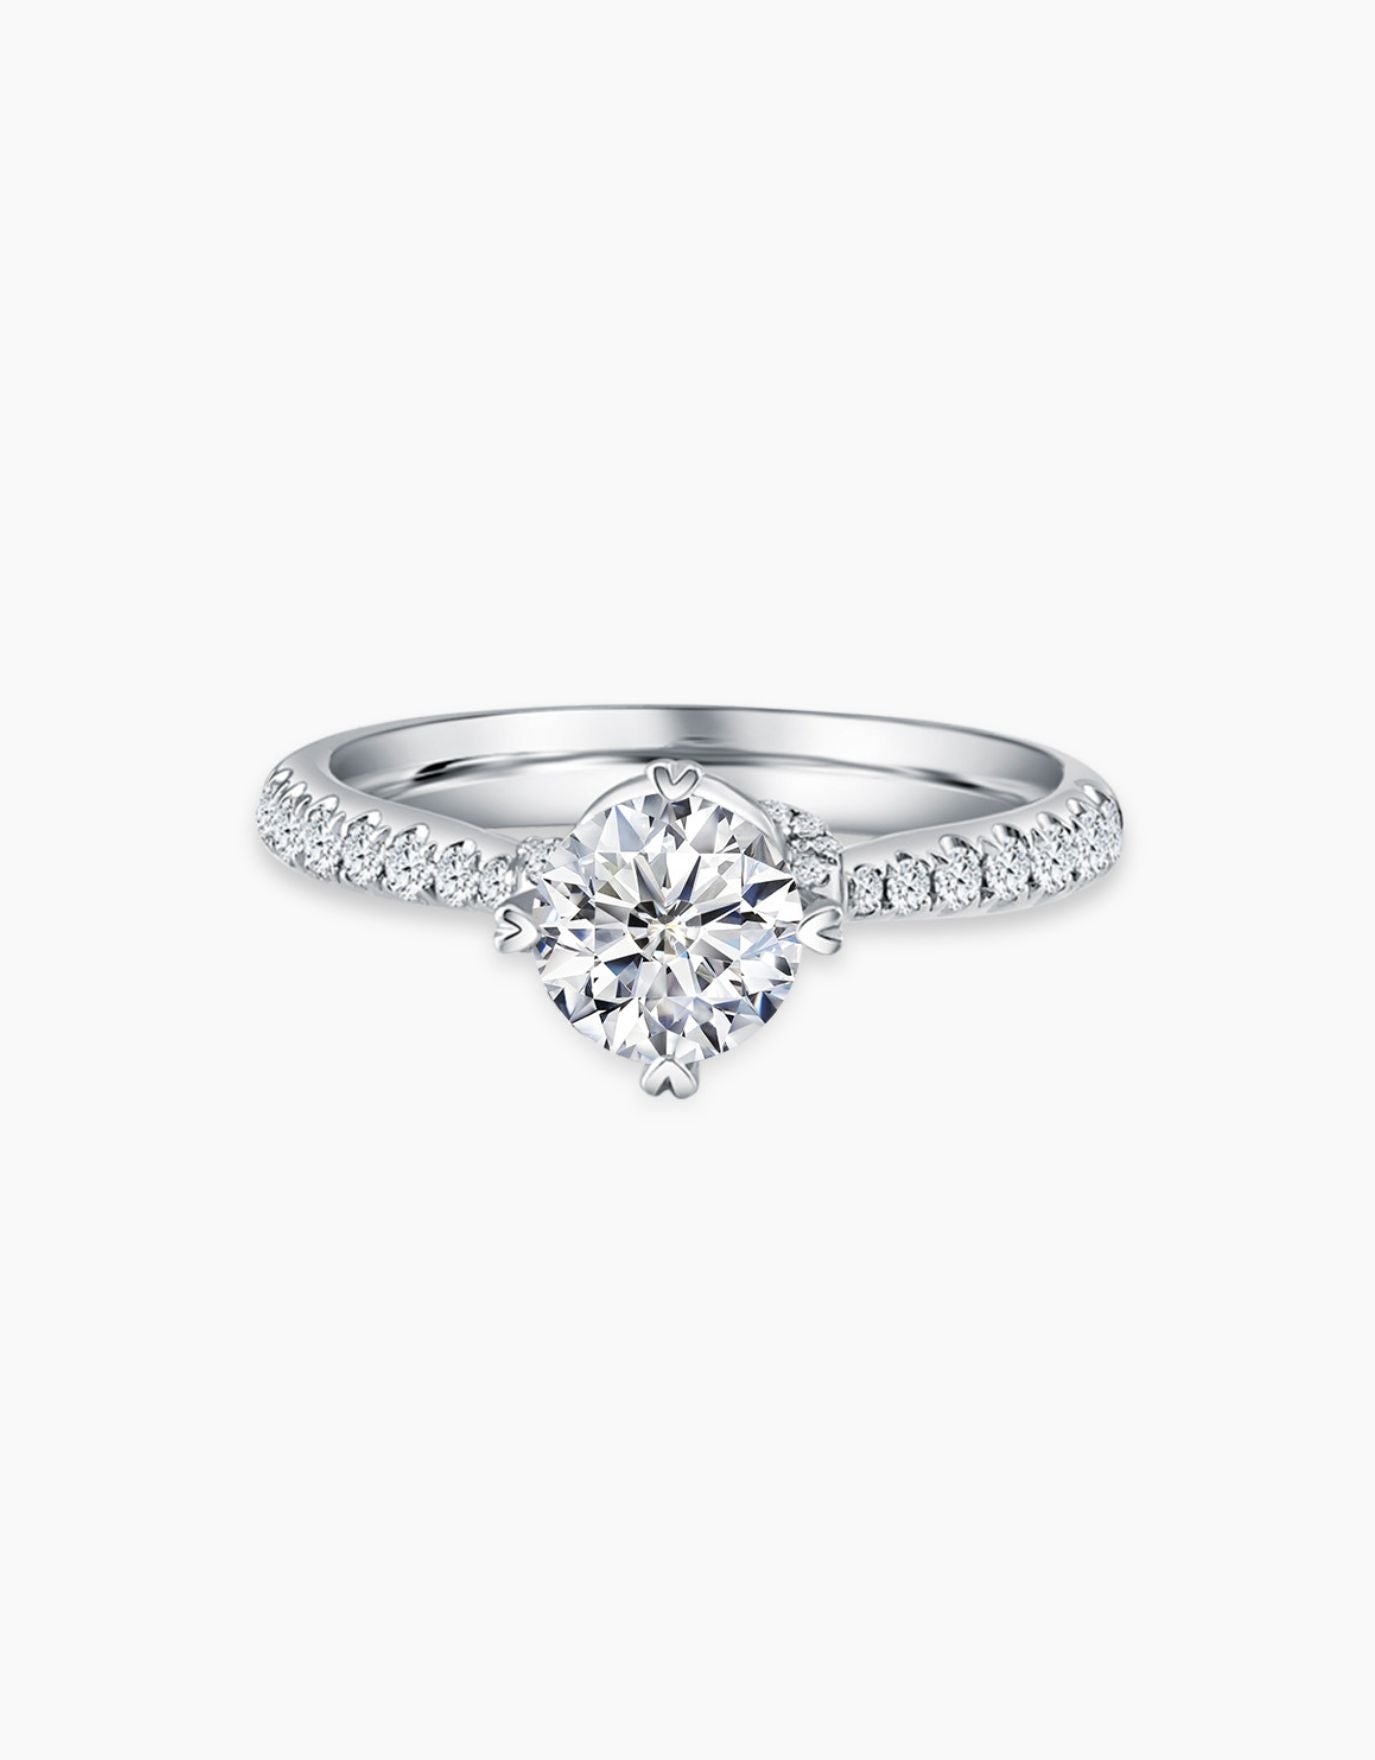 LVC Say Love™ Destiny Diamond Ring - 1.0ct